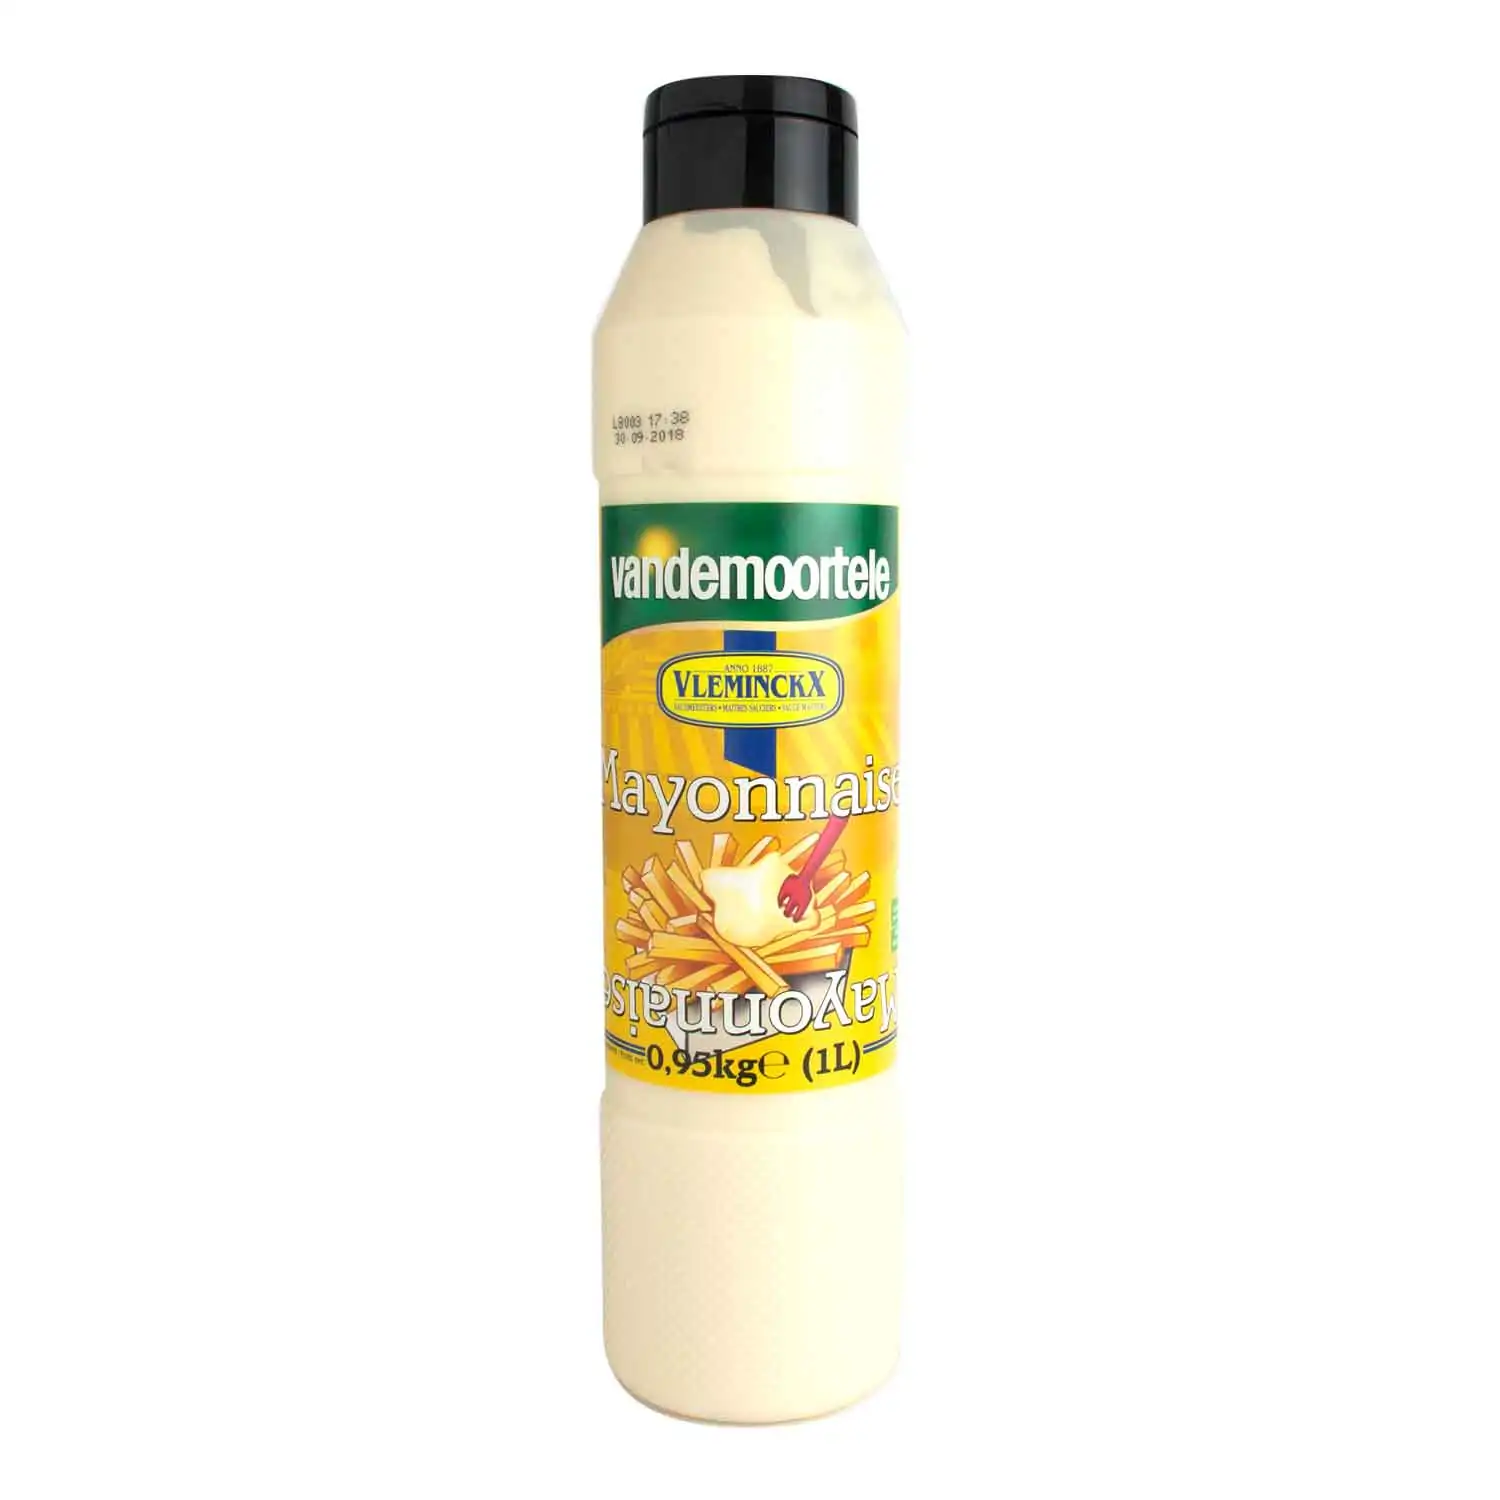 Vandemoortele mayonnaise 1l - Buy at Real Tobacco